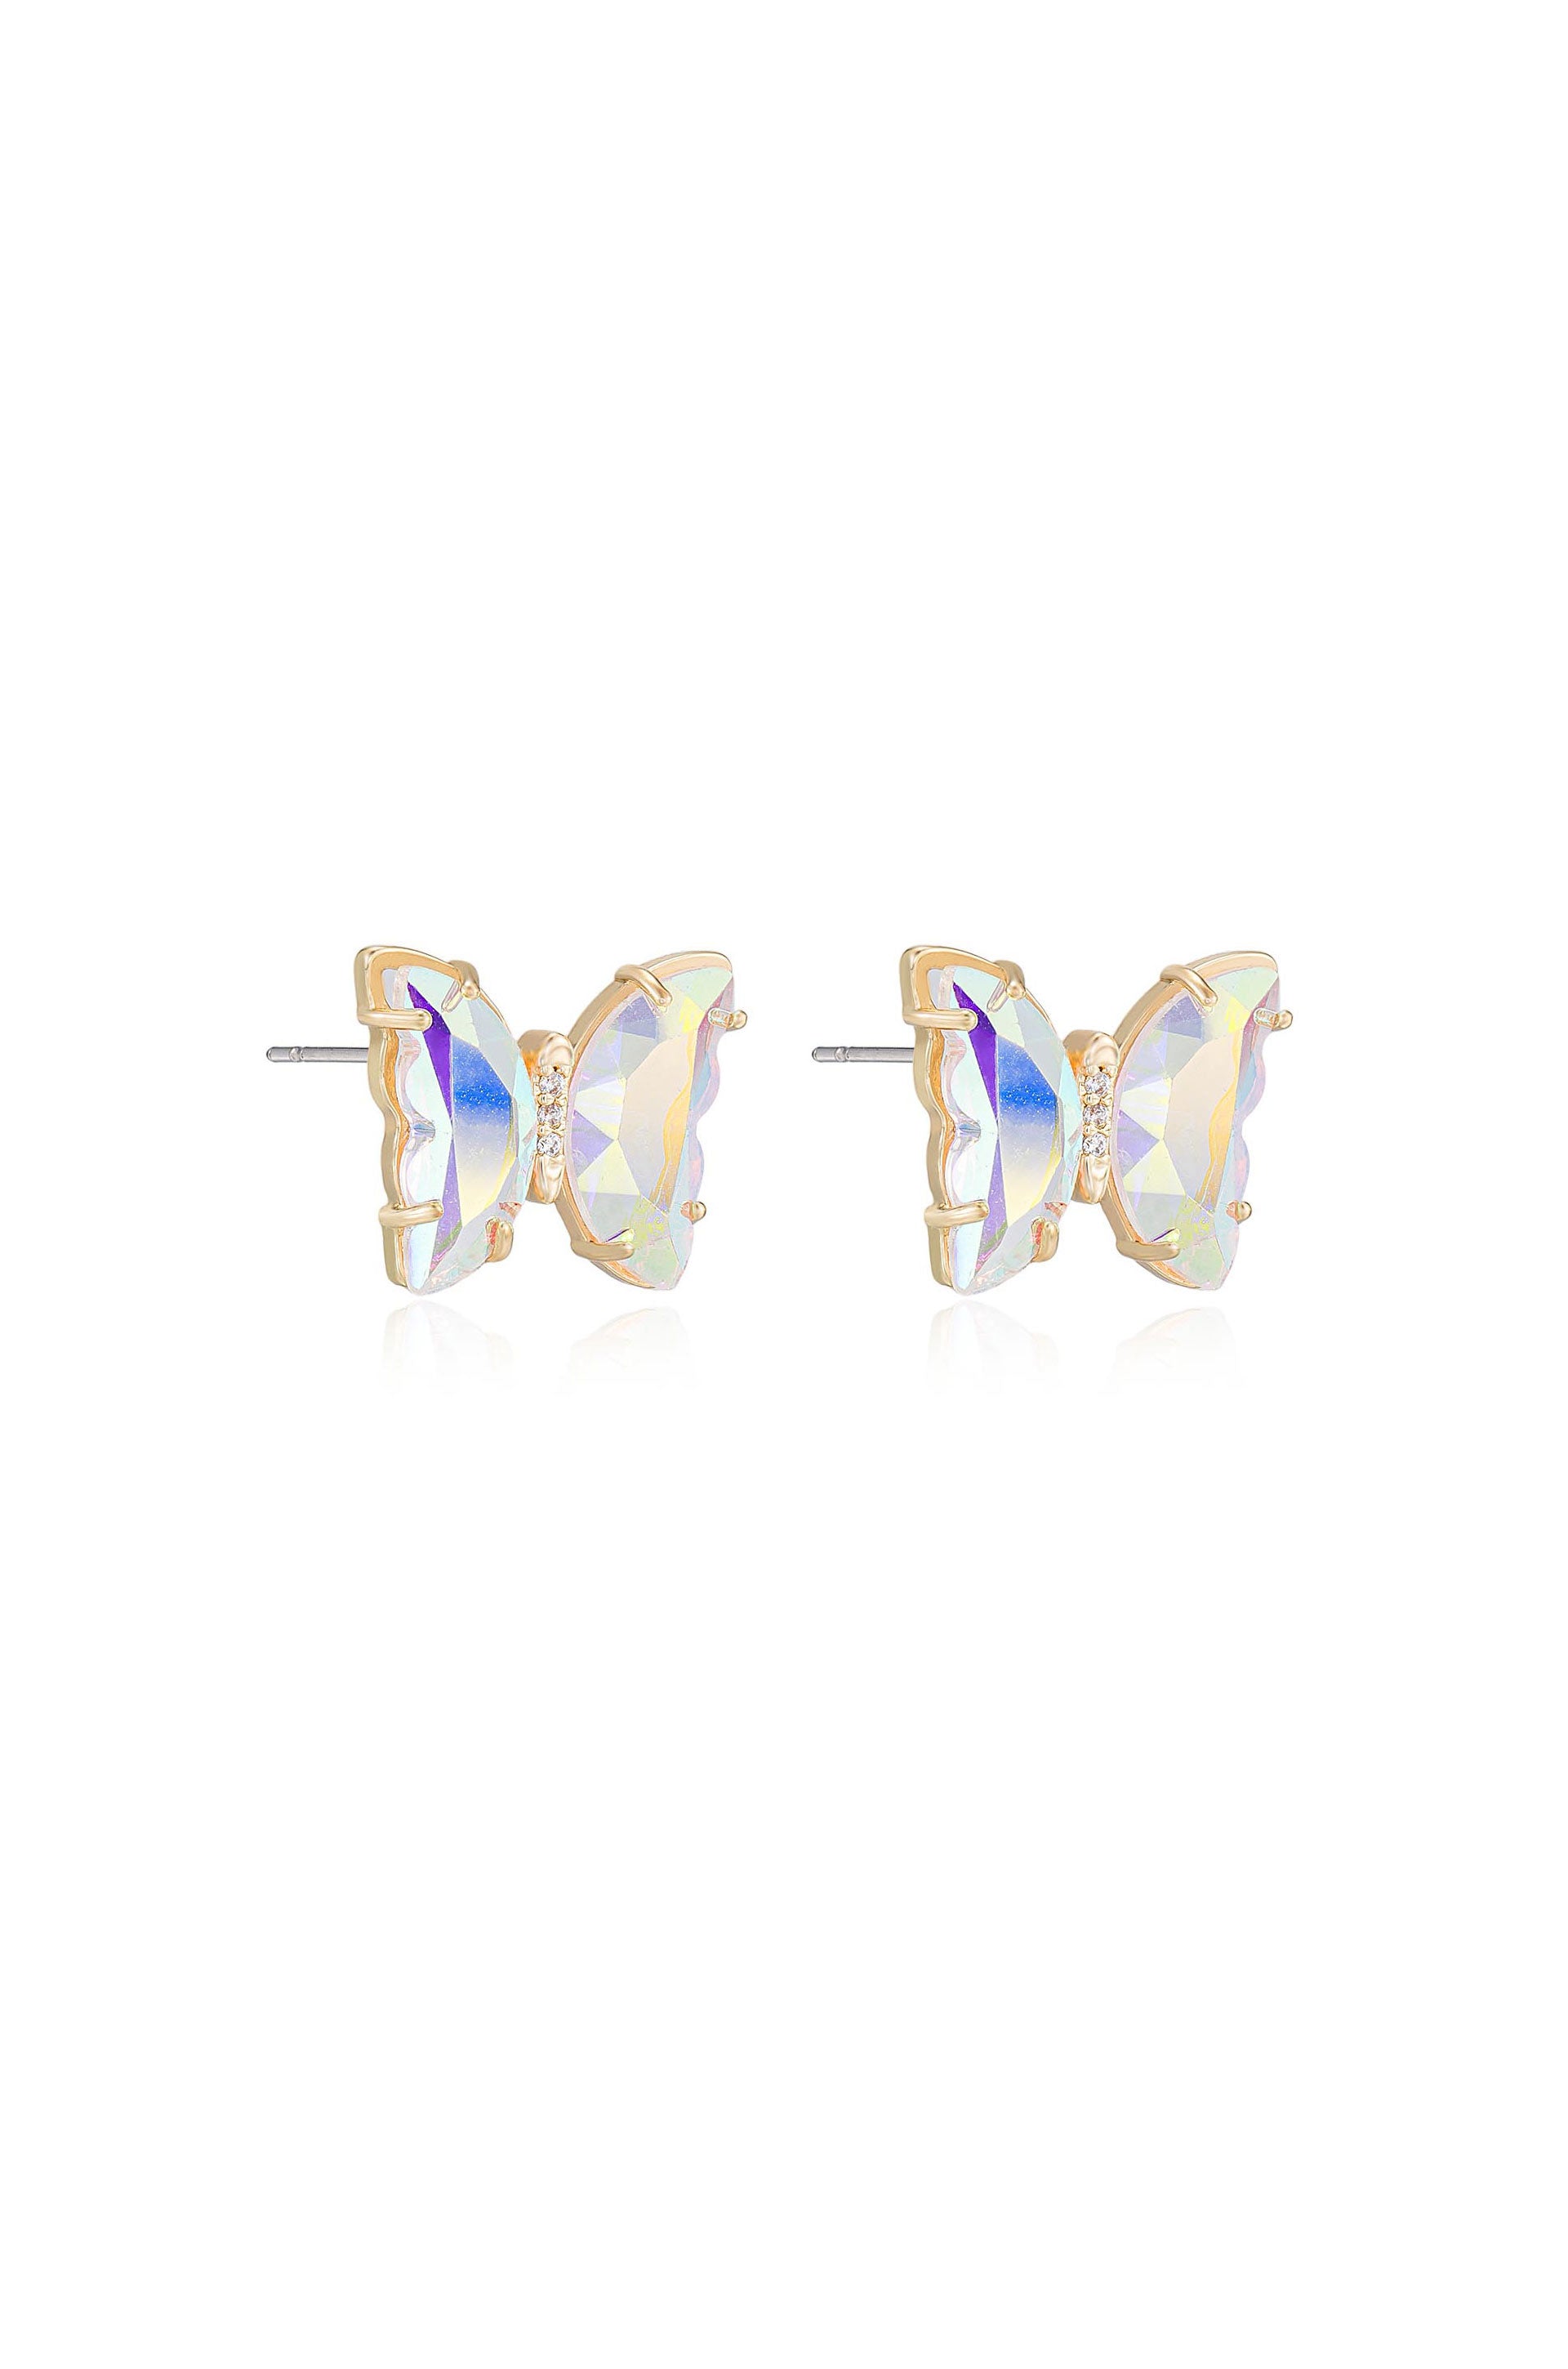 Flutter Away Crystal 18k Gold Plated Earrings in clear side